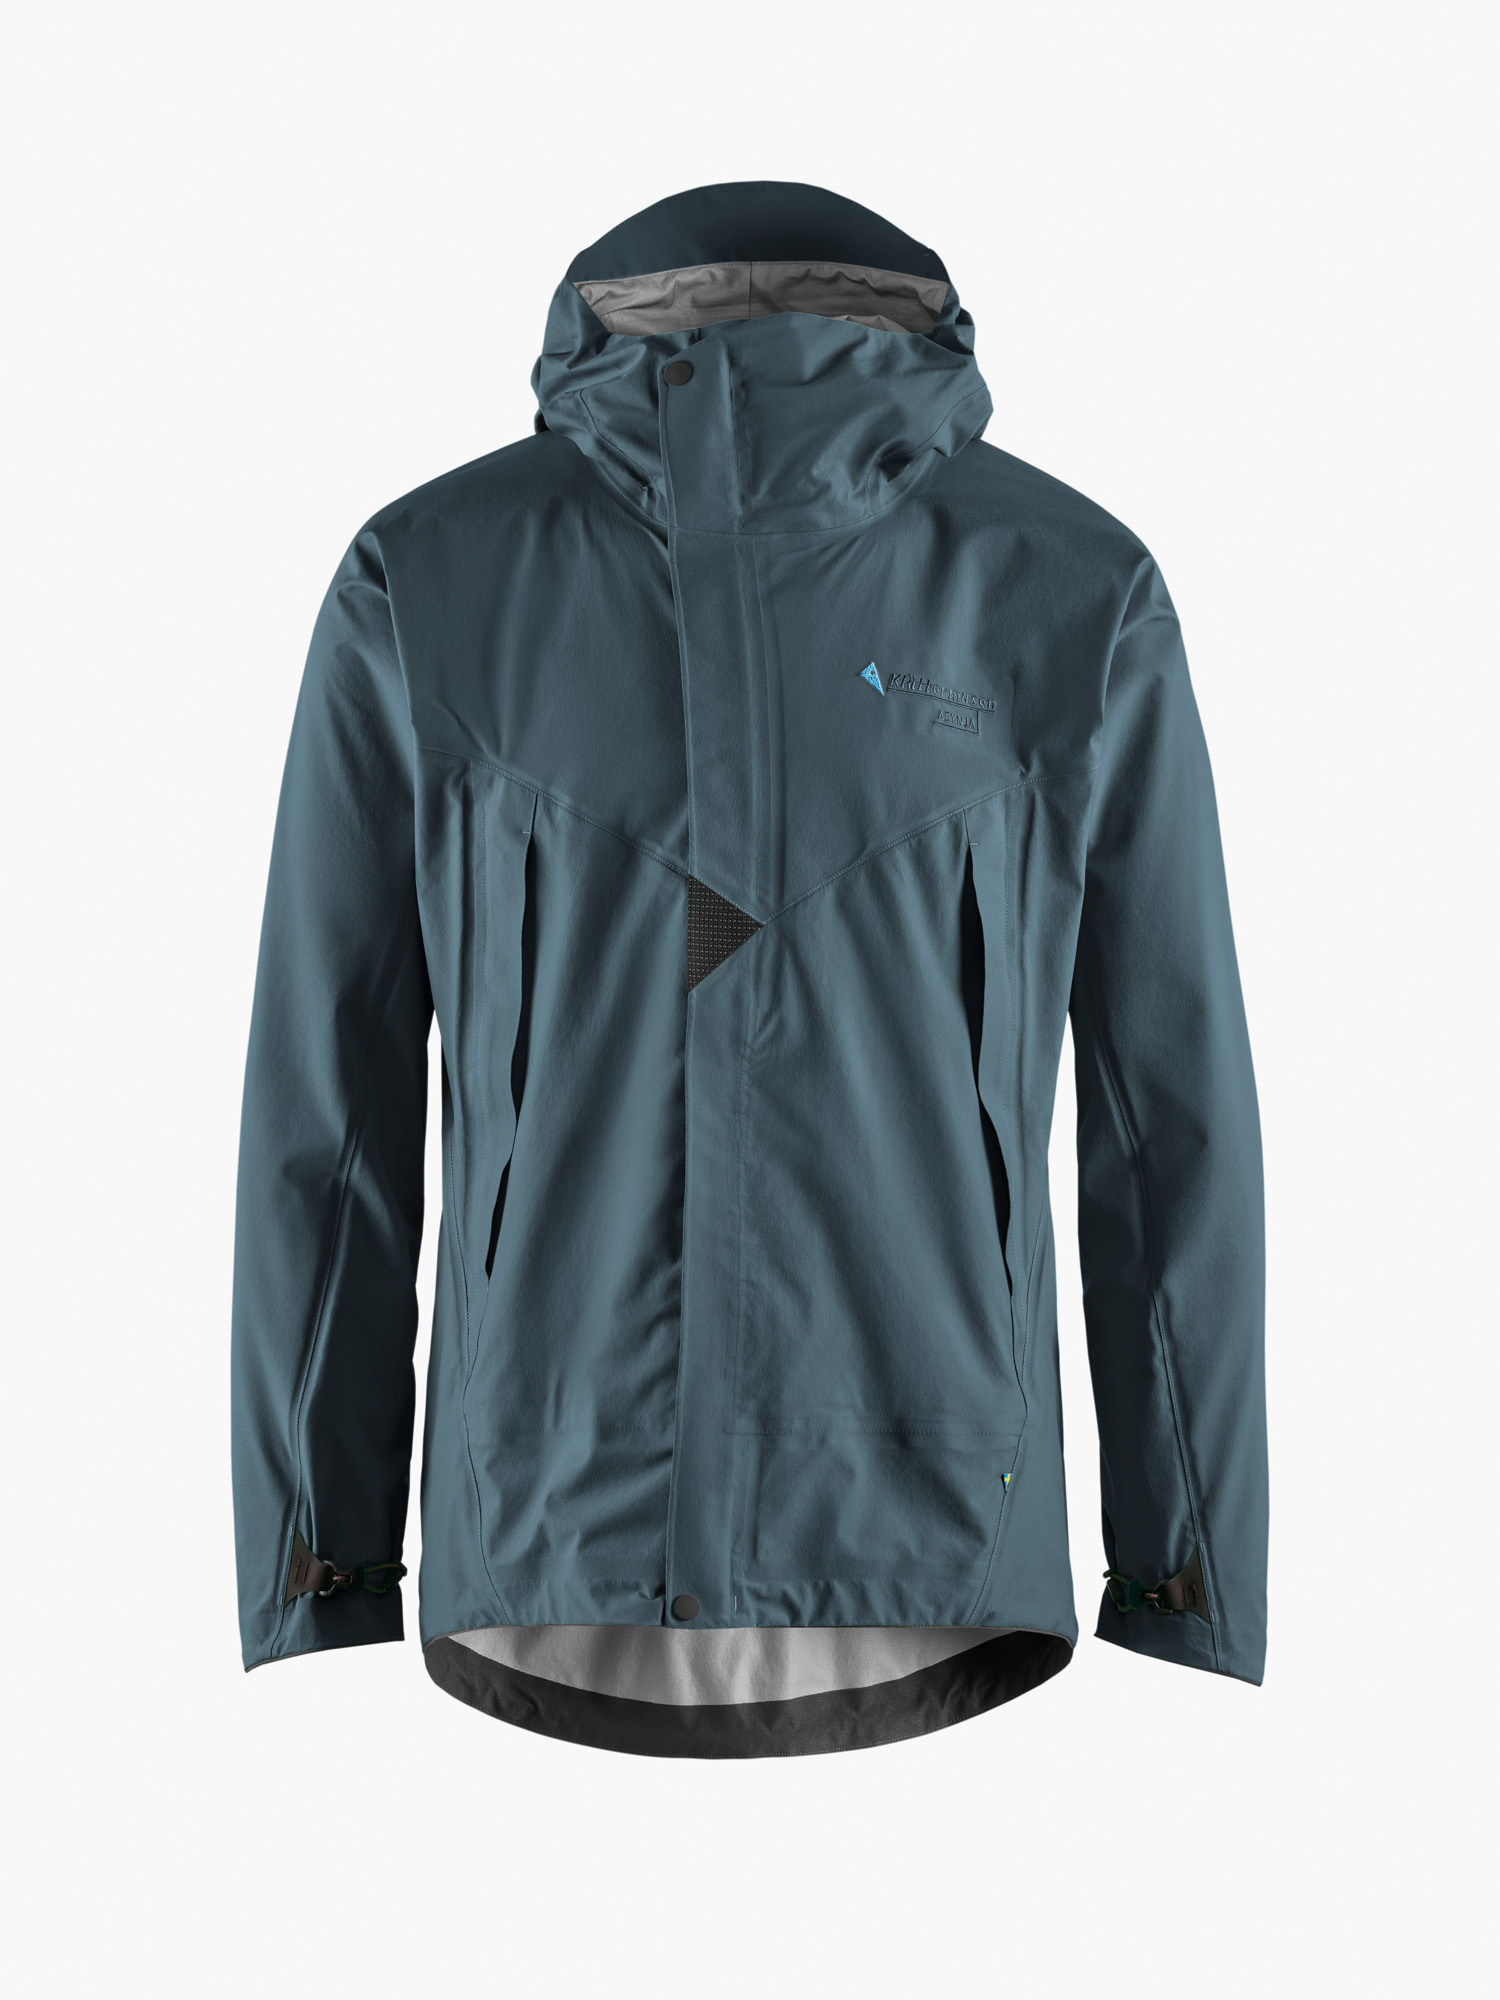 Klättermusen Asynja waterproof jacket in blue. Optimal summer rain cover jacket.